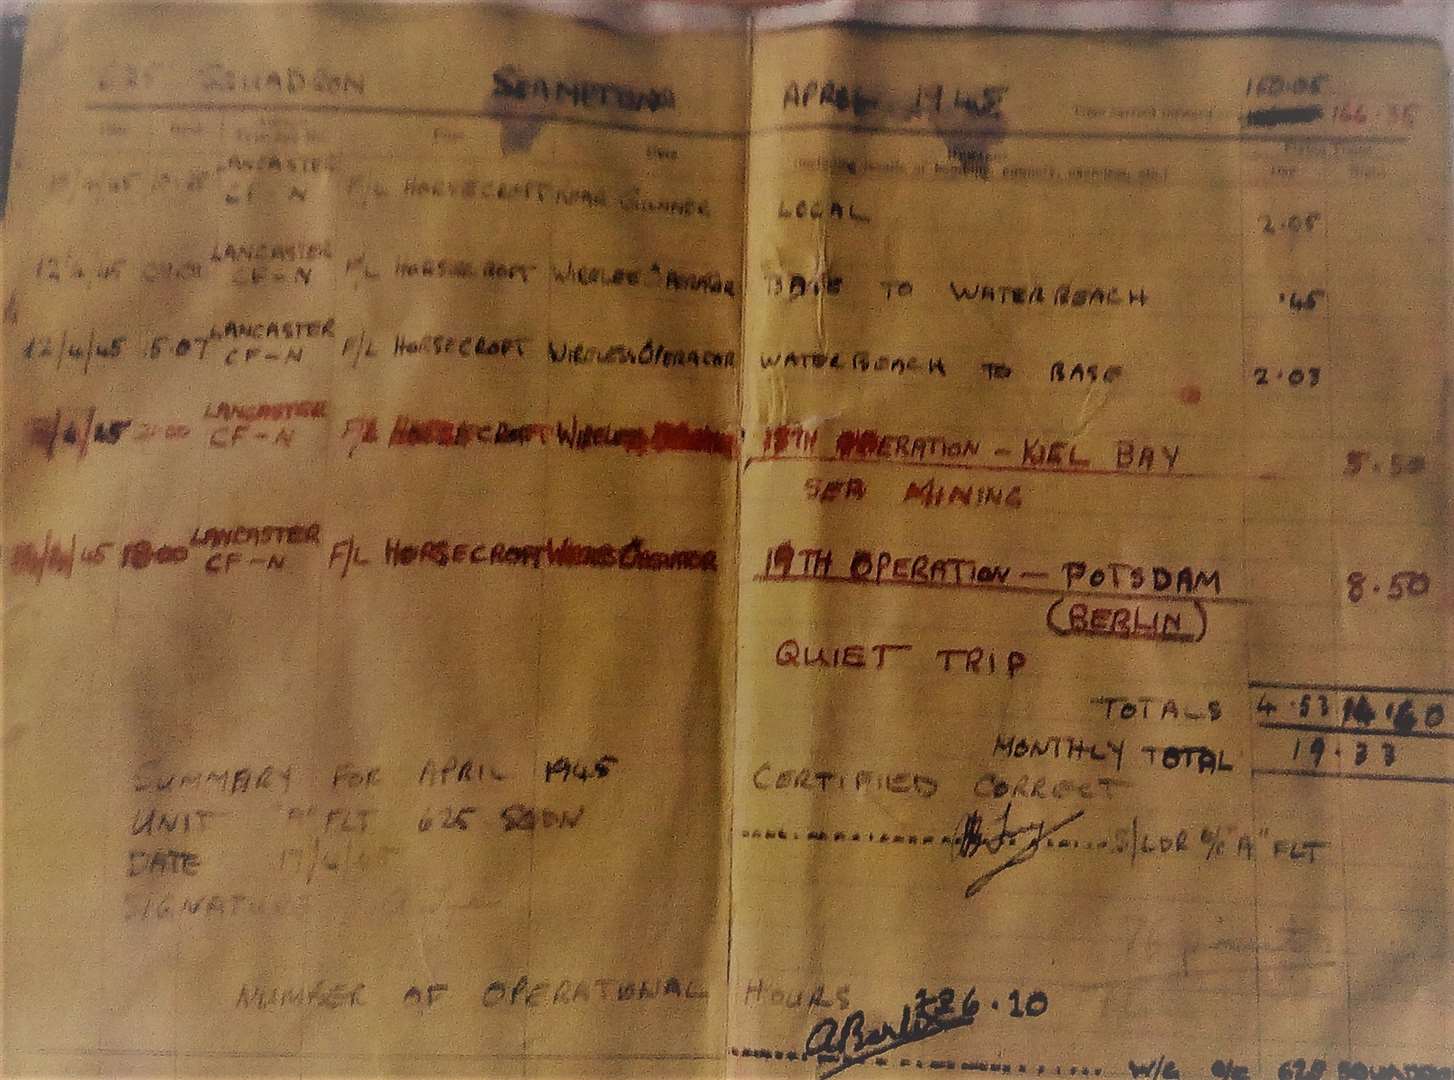 The last flight log of Alf's final mission